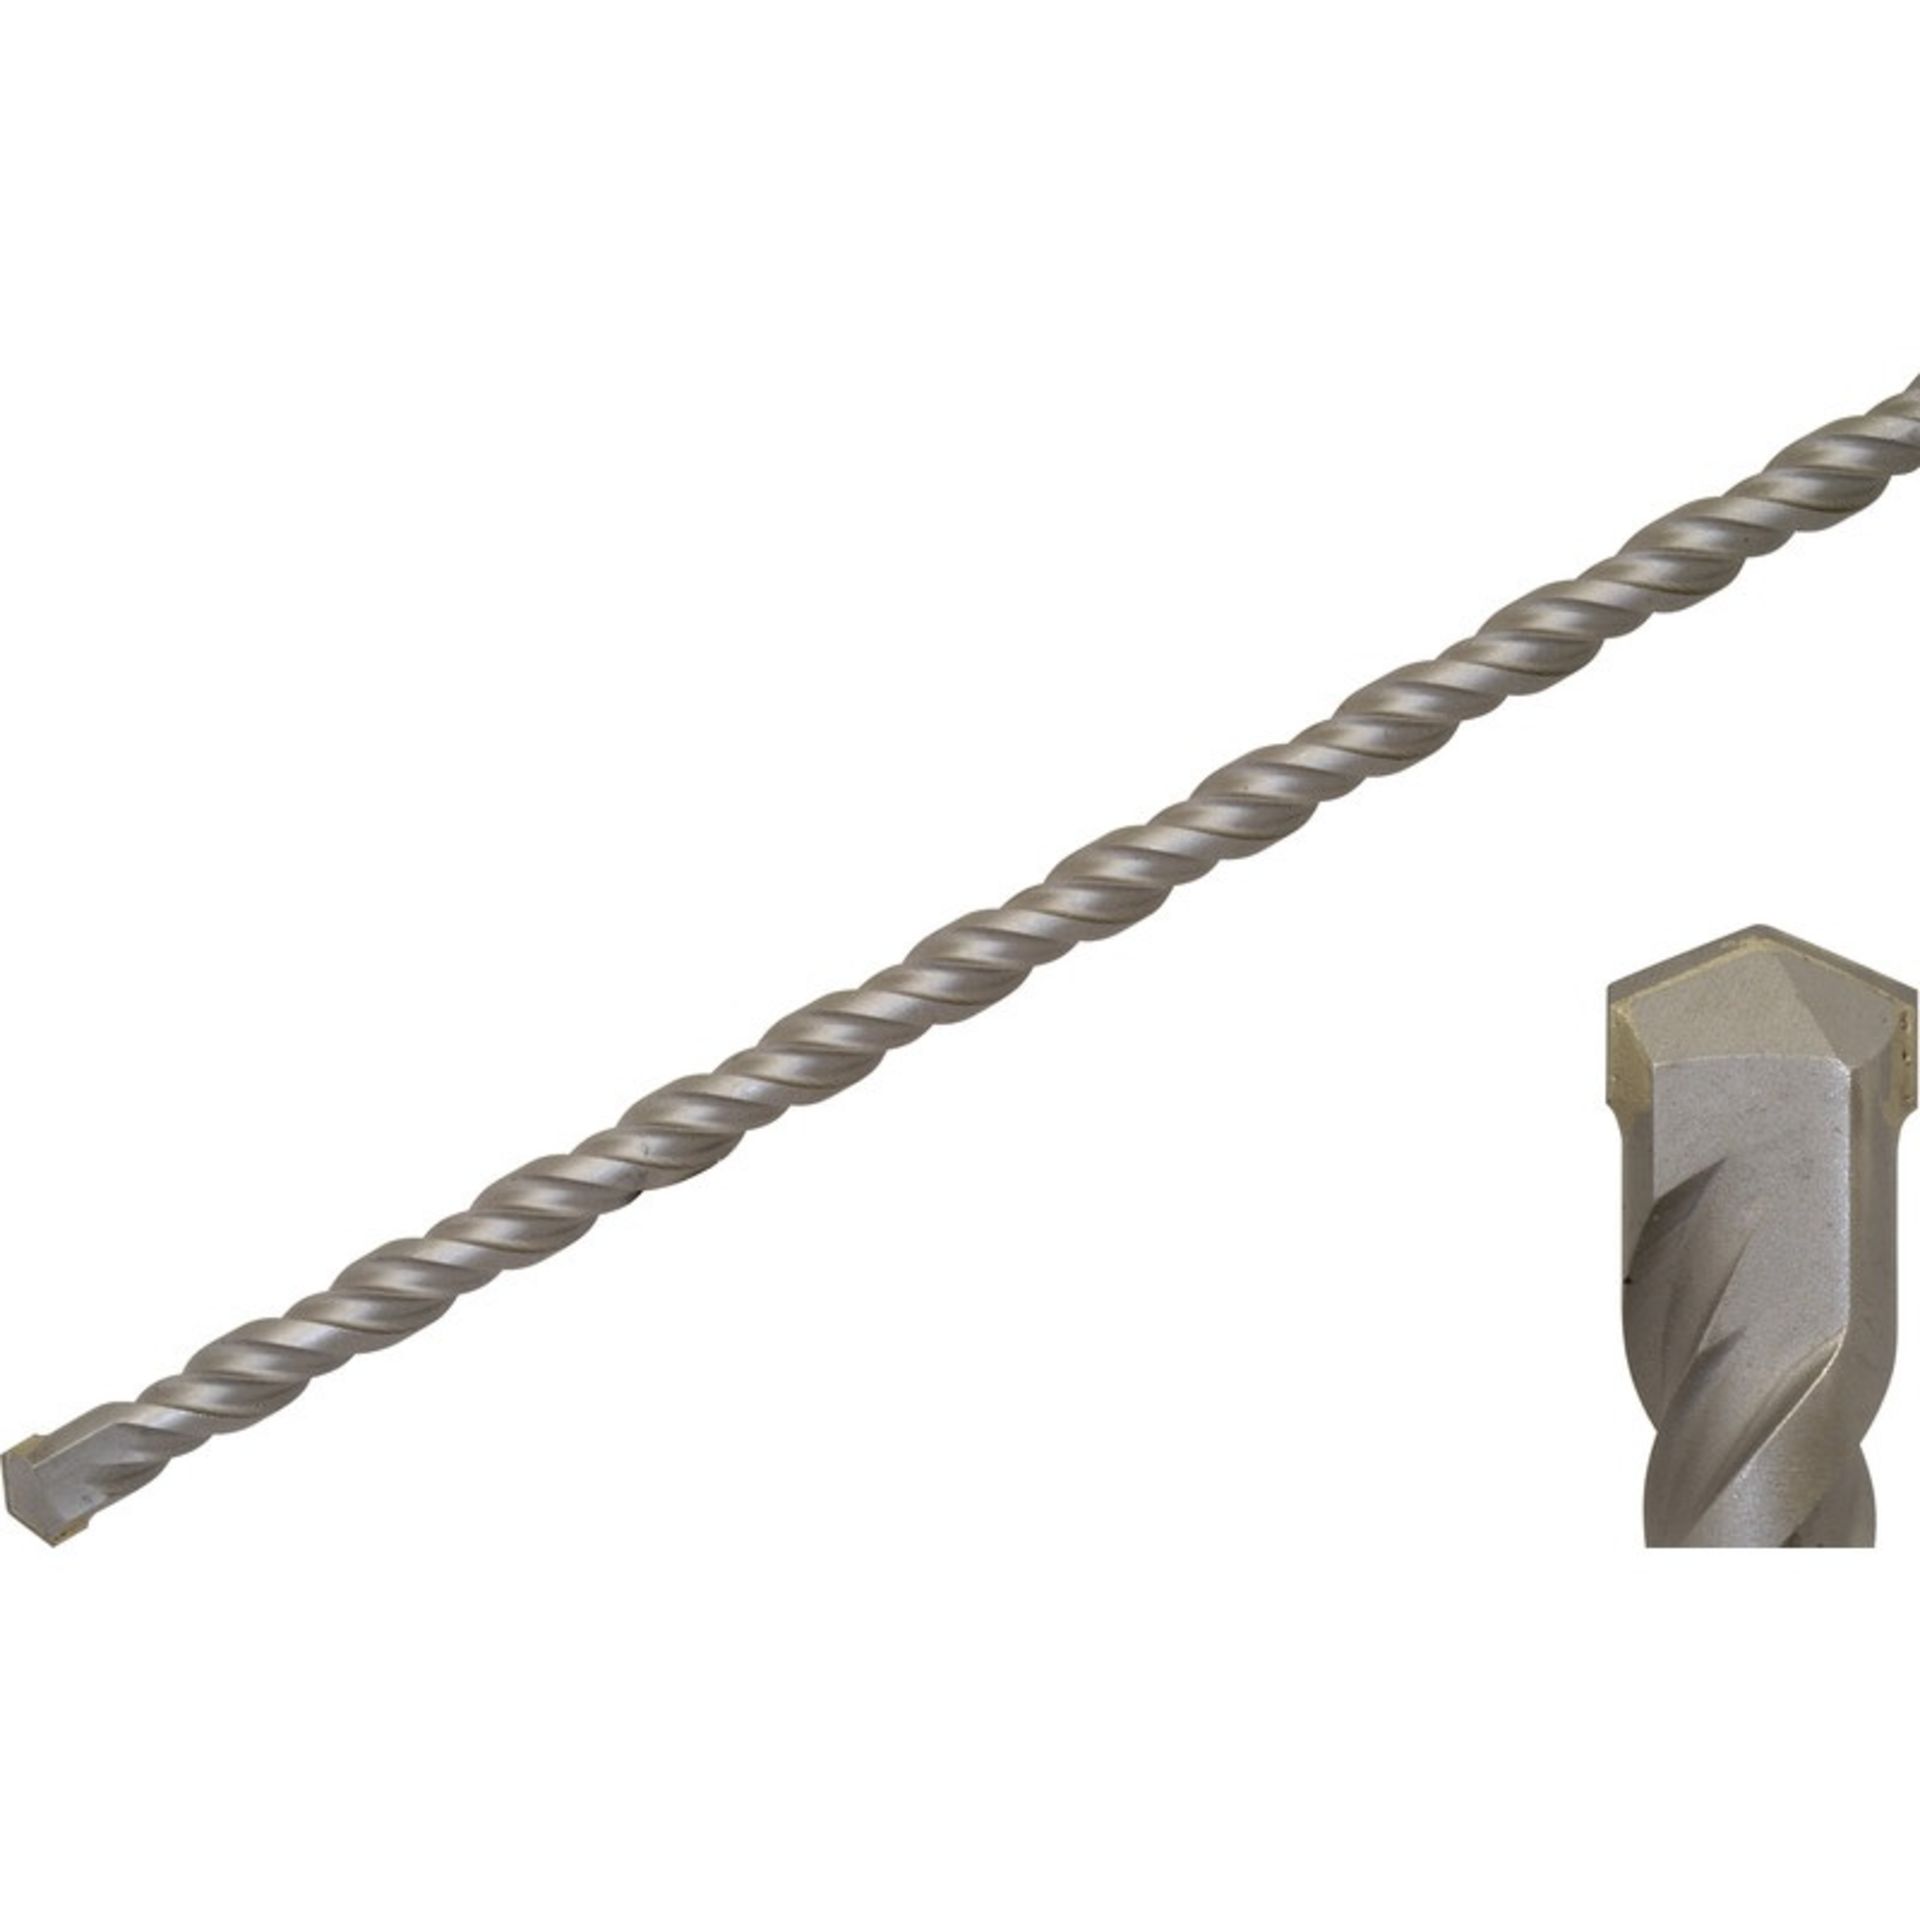 3 x Mexco 10 mm x 210 mm Masonry Hammer Drill Bit Retail 5.99 Each - Image 2 of 2